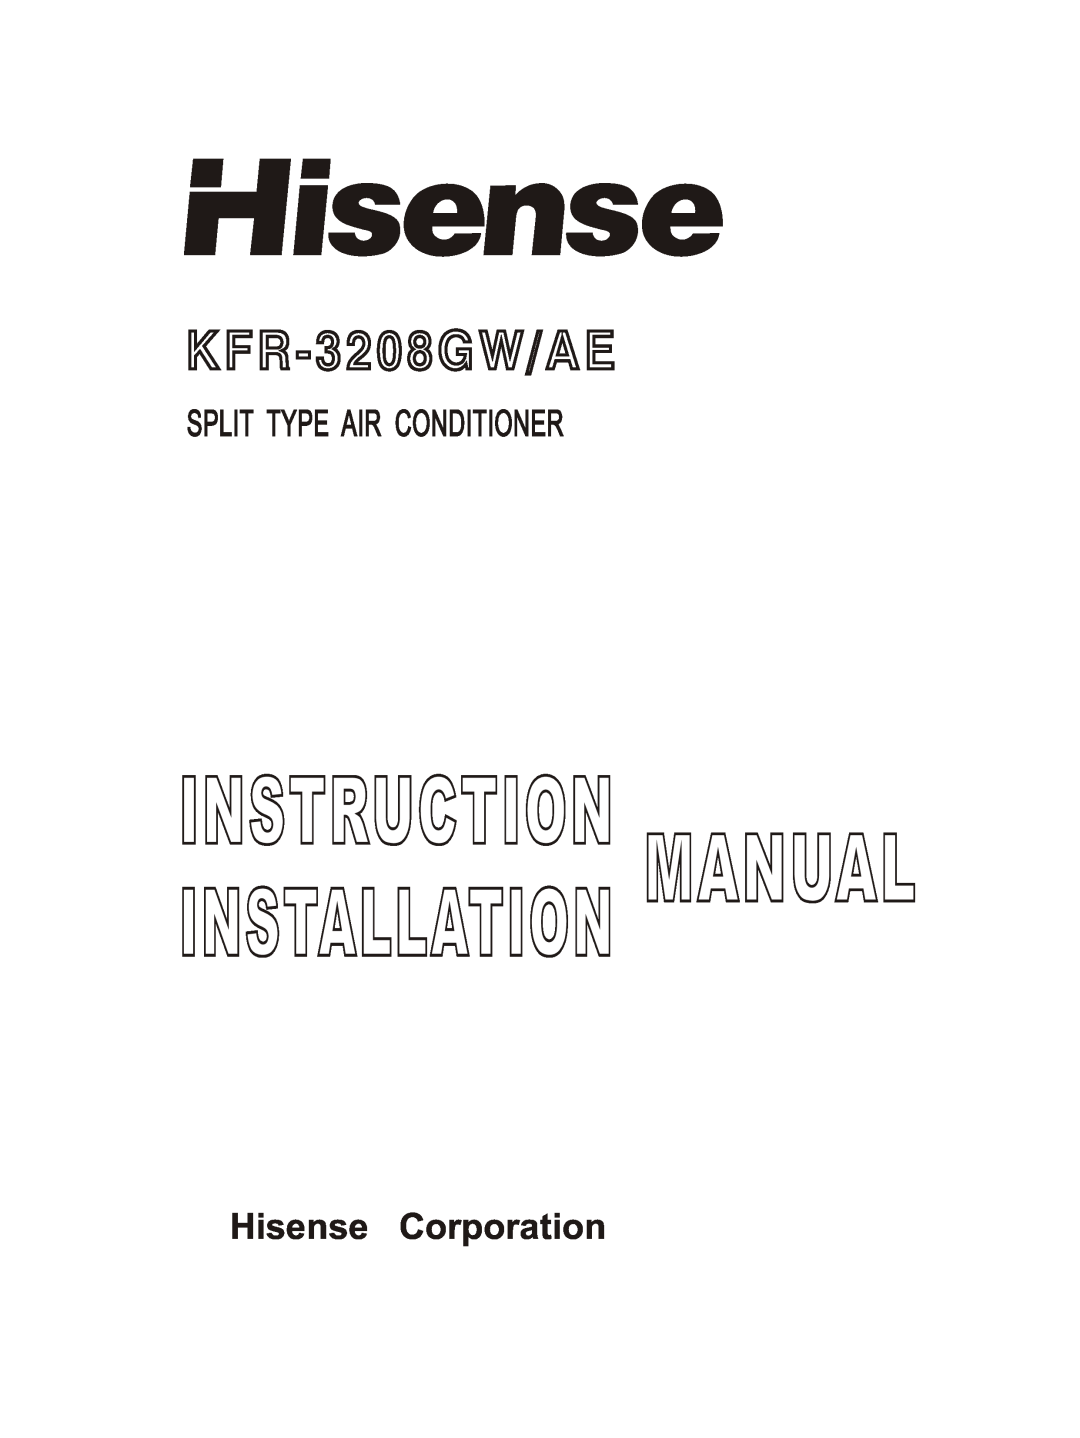 Hisense Group instruction manual KFR-3208GW/AE, Split Type Air Conditioner, Hisense Corporation 